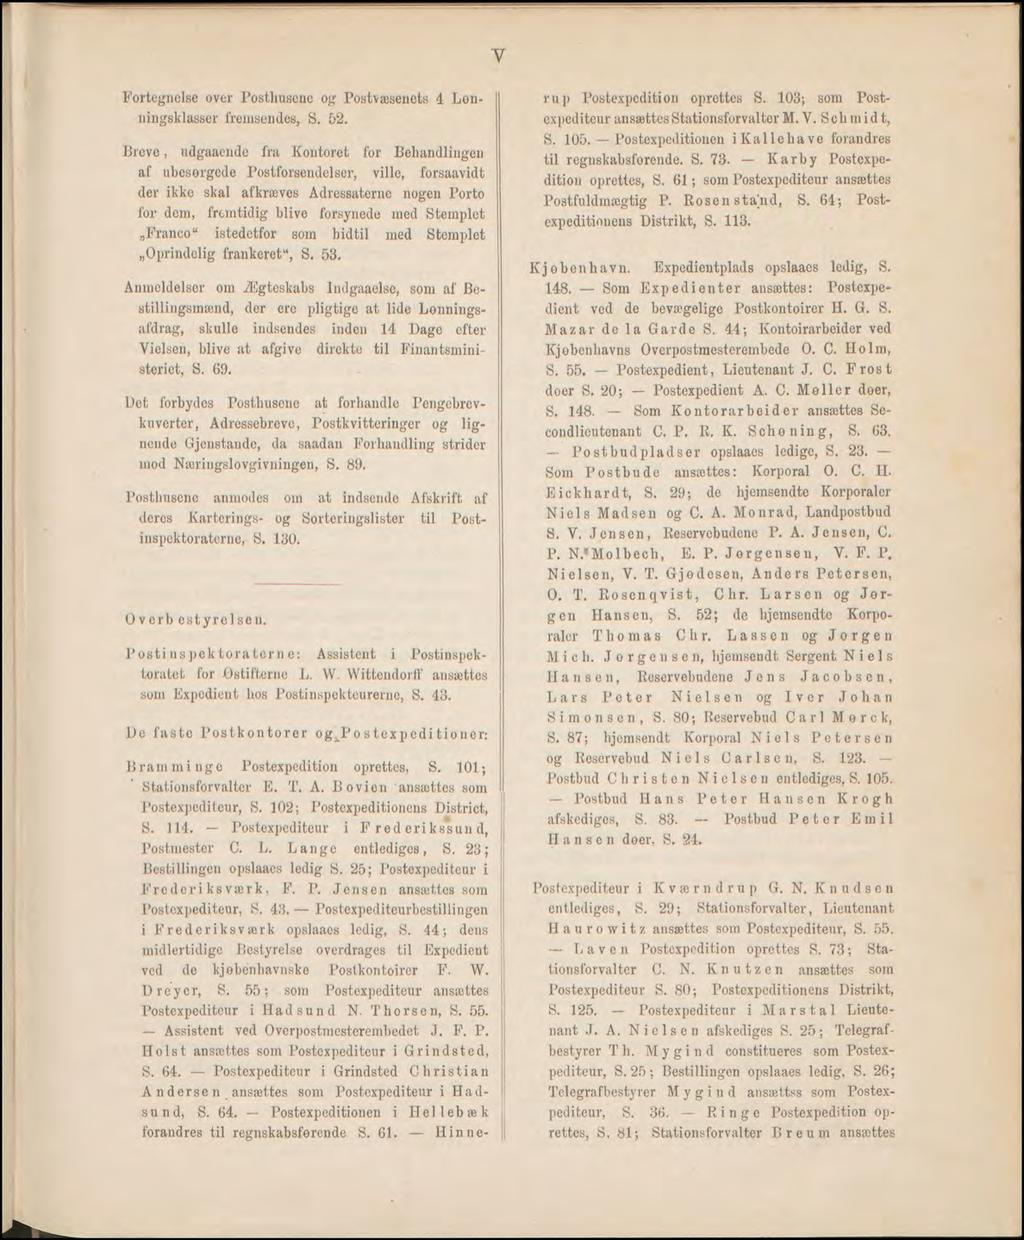 Fortegnelse over Posthusene og Postvæsenets 4 Lonningsklasser fremsendes, S. 52.